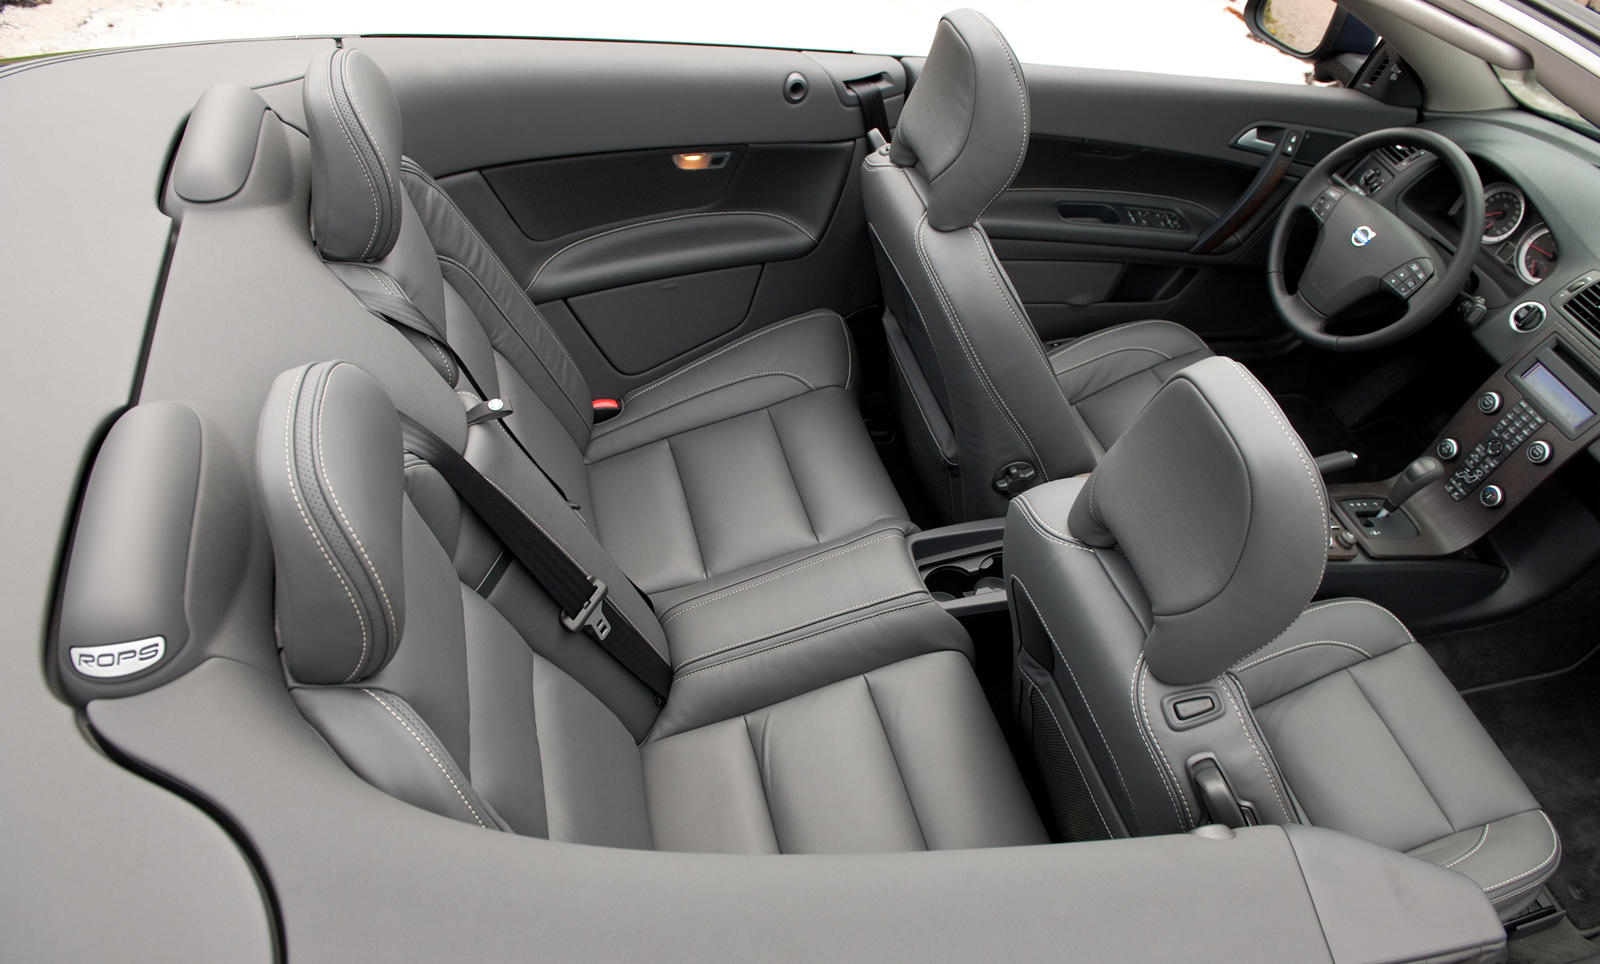 Volvo C70 interior - Seats